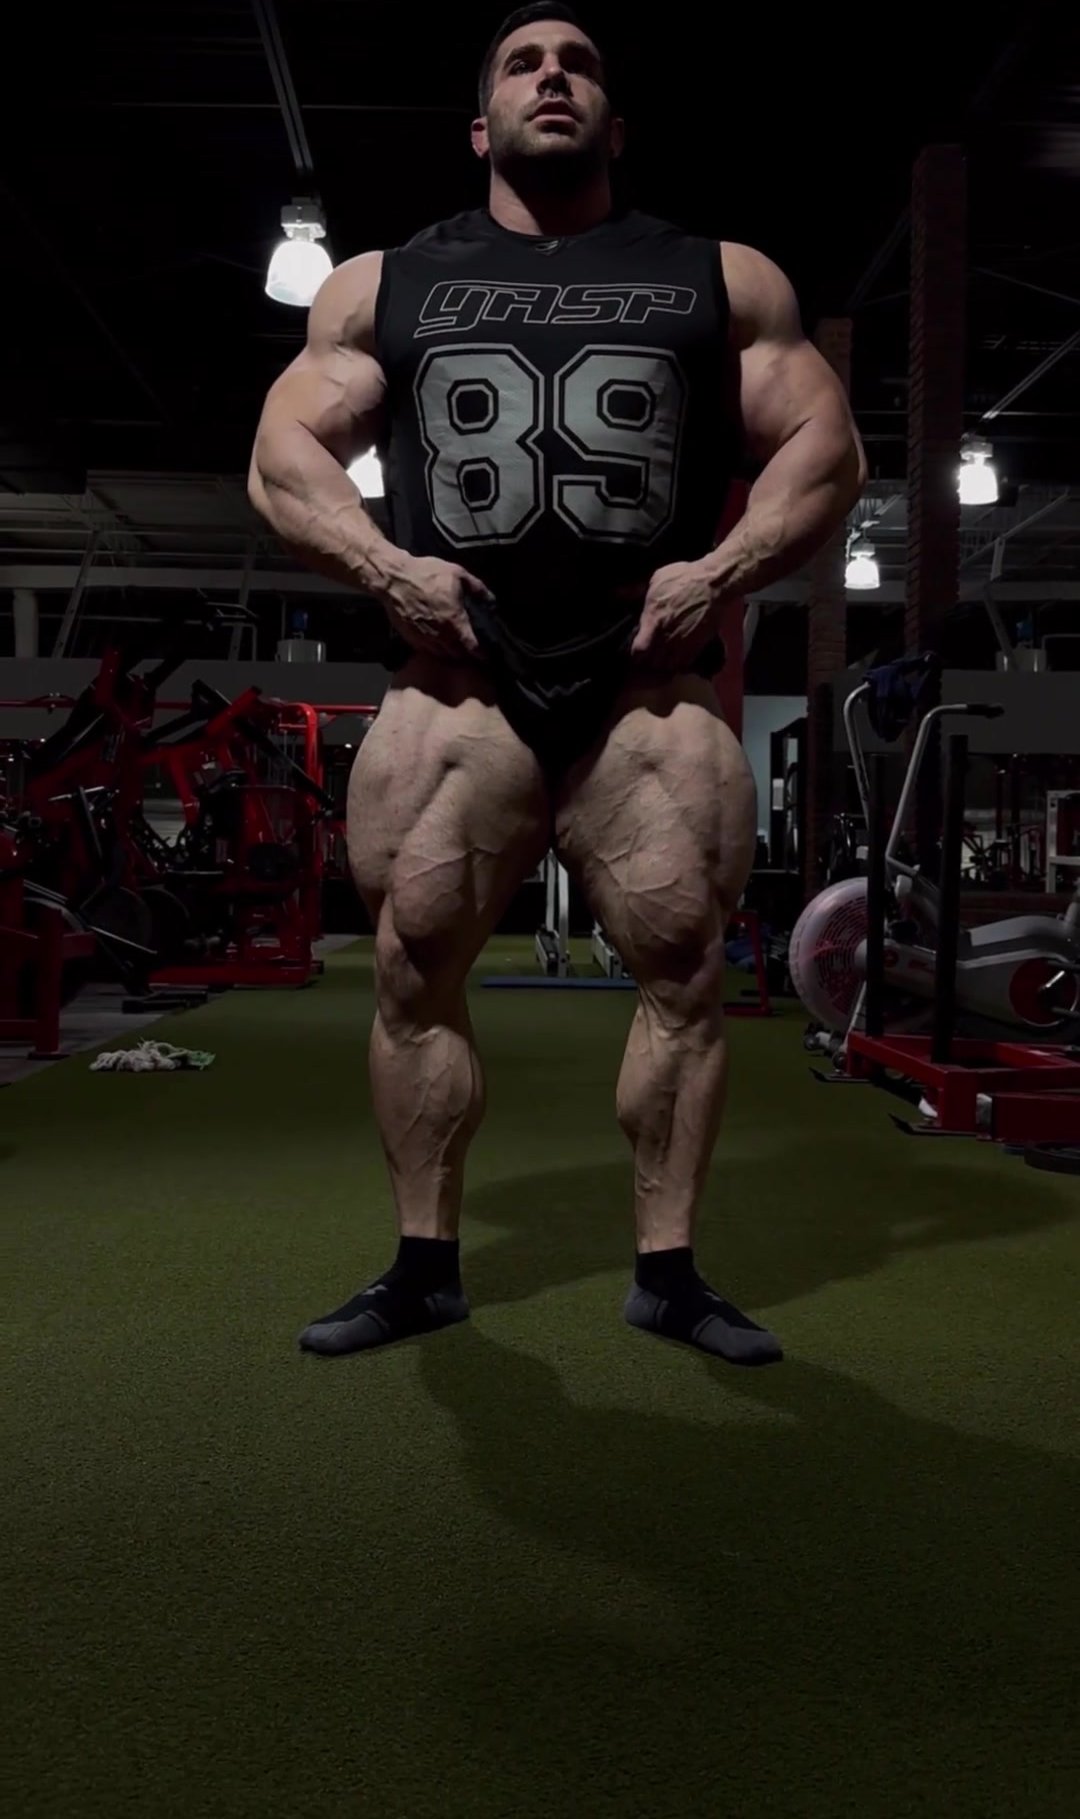 Big muscle legs